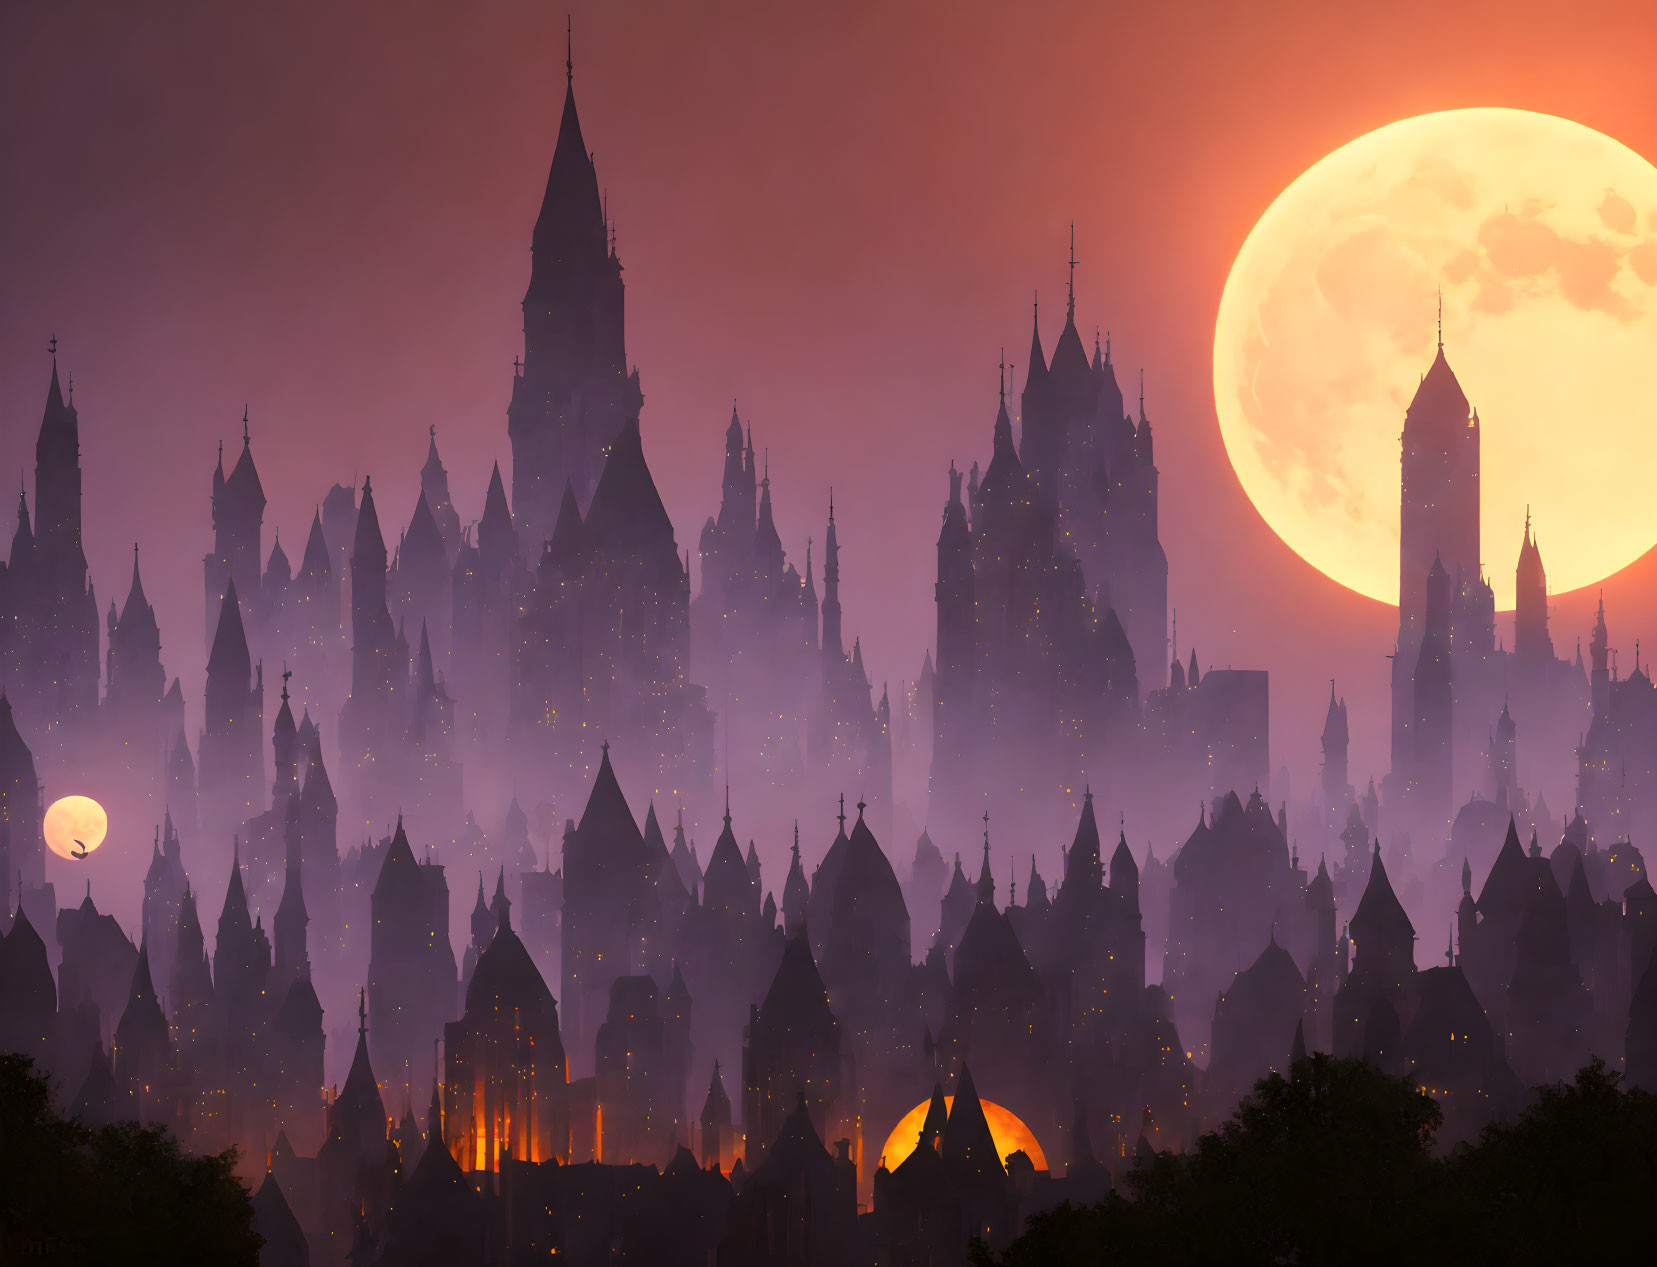 Gothic spires silhouette against orange moon in fantasy cityscape